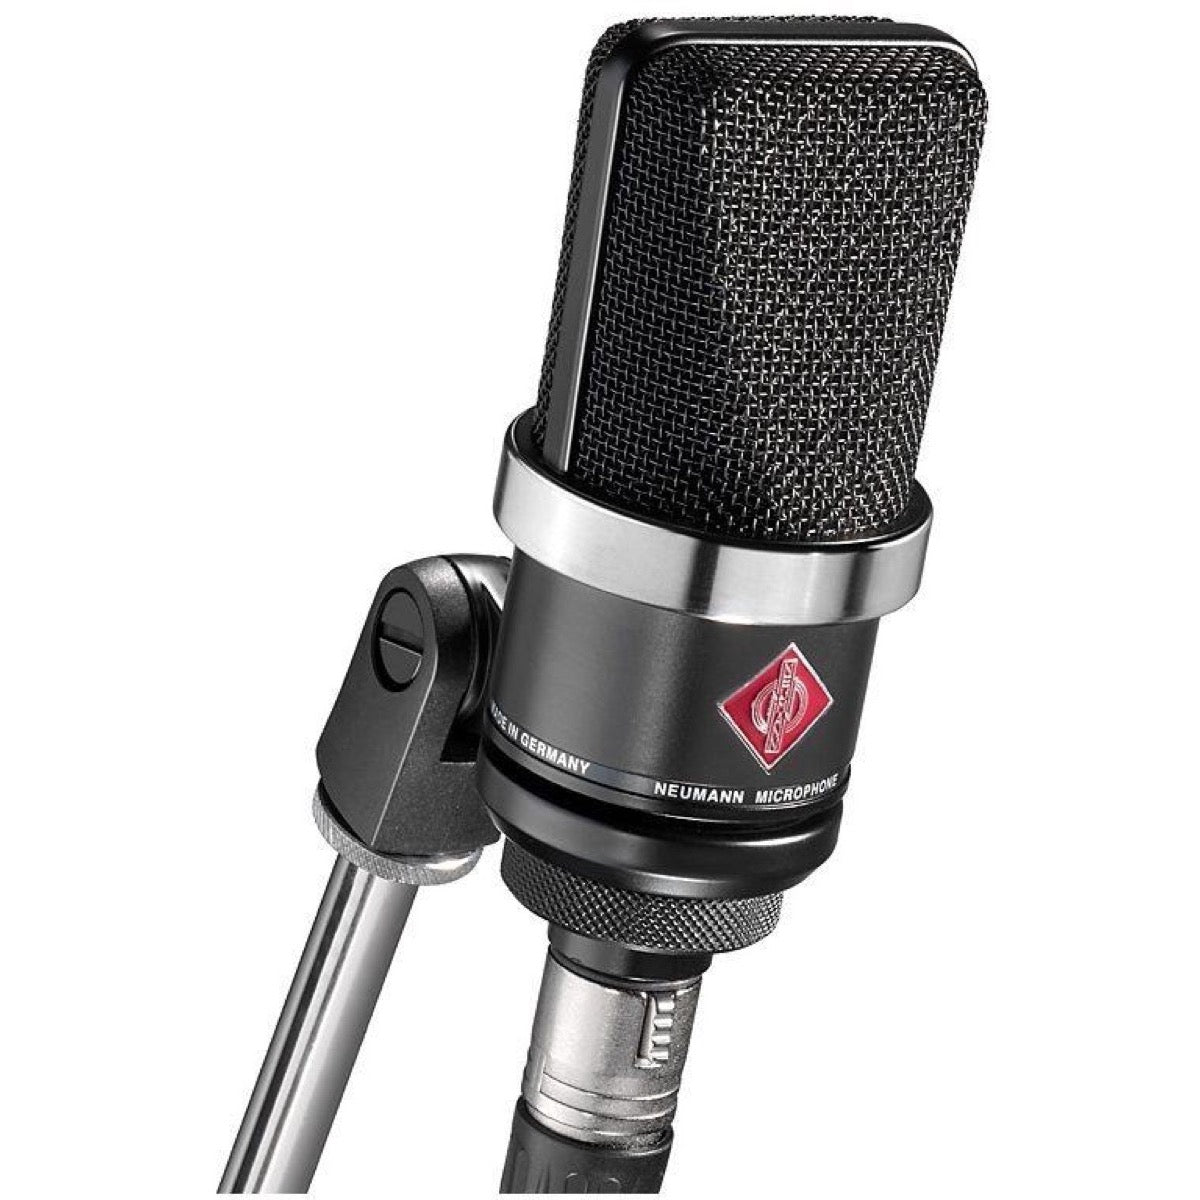 Neumann TLM 102 Studio Microphone, Black, with Standmount